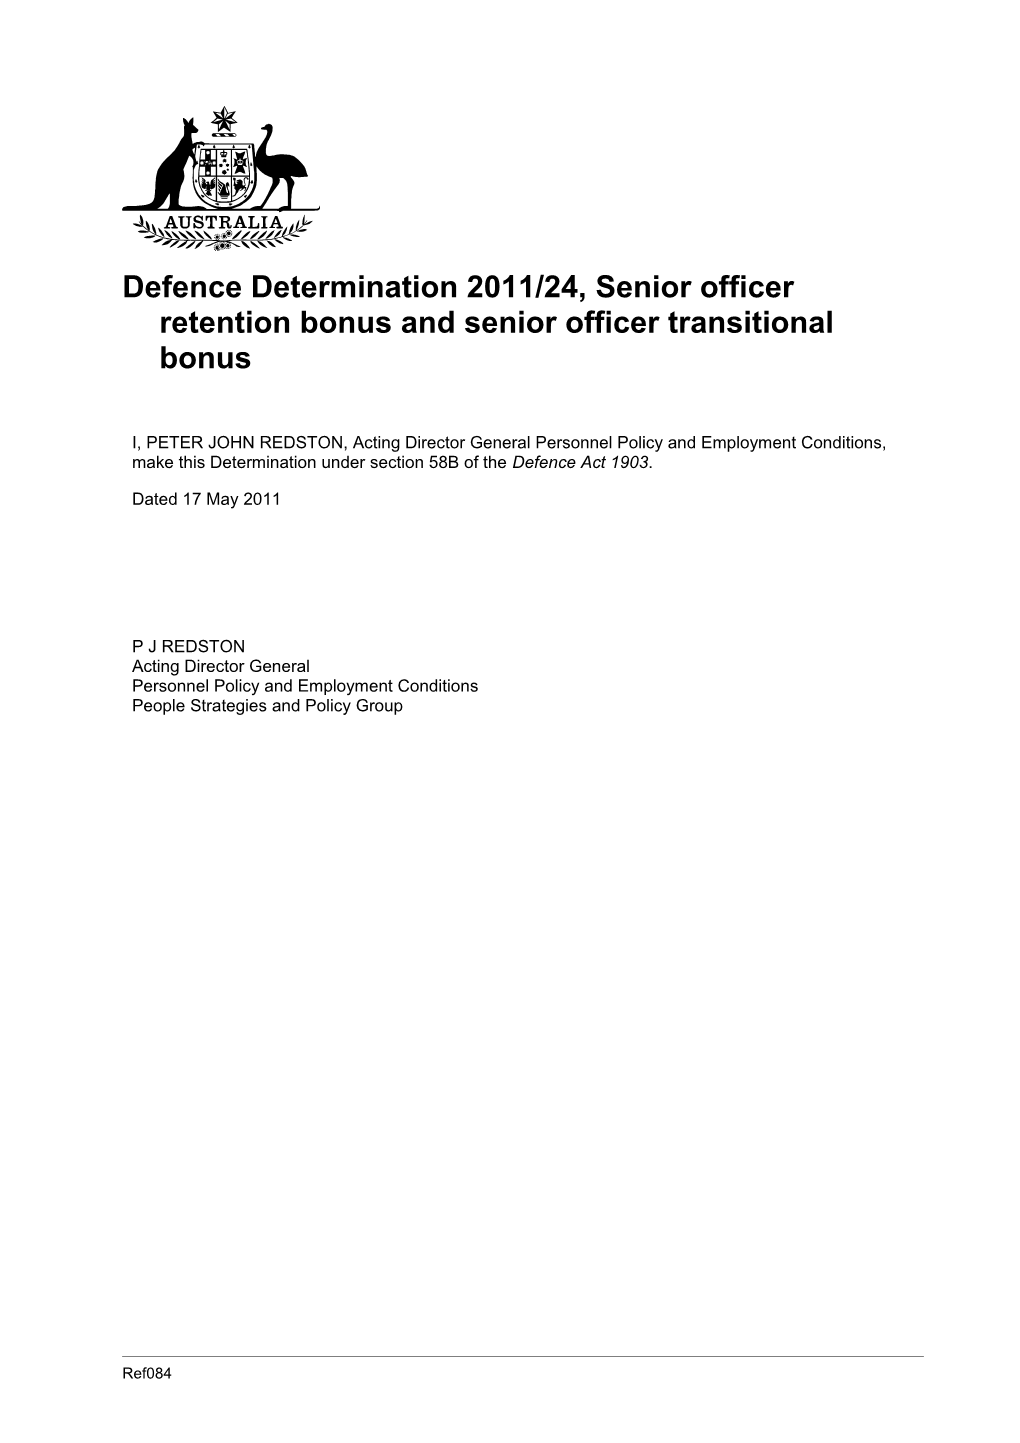 Defence Determination 2011/24, Senior Officer Retention Bonus and Senior Officer Transitional